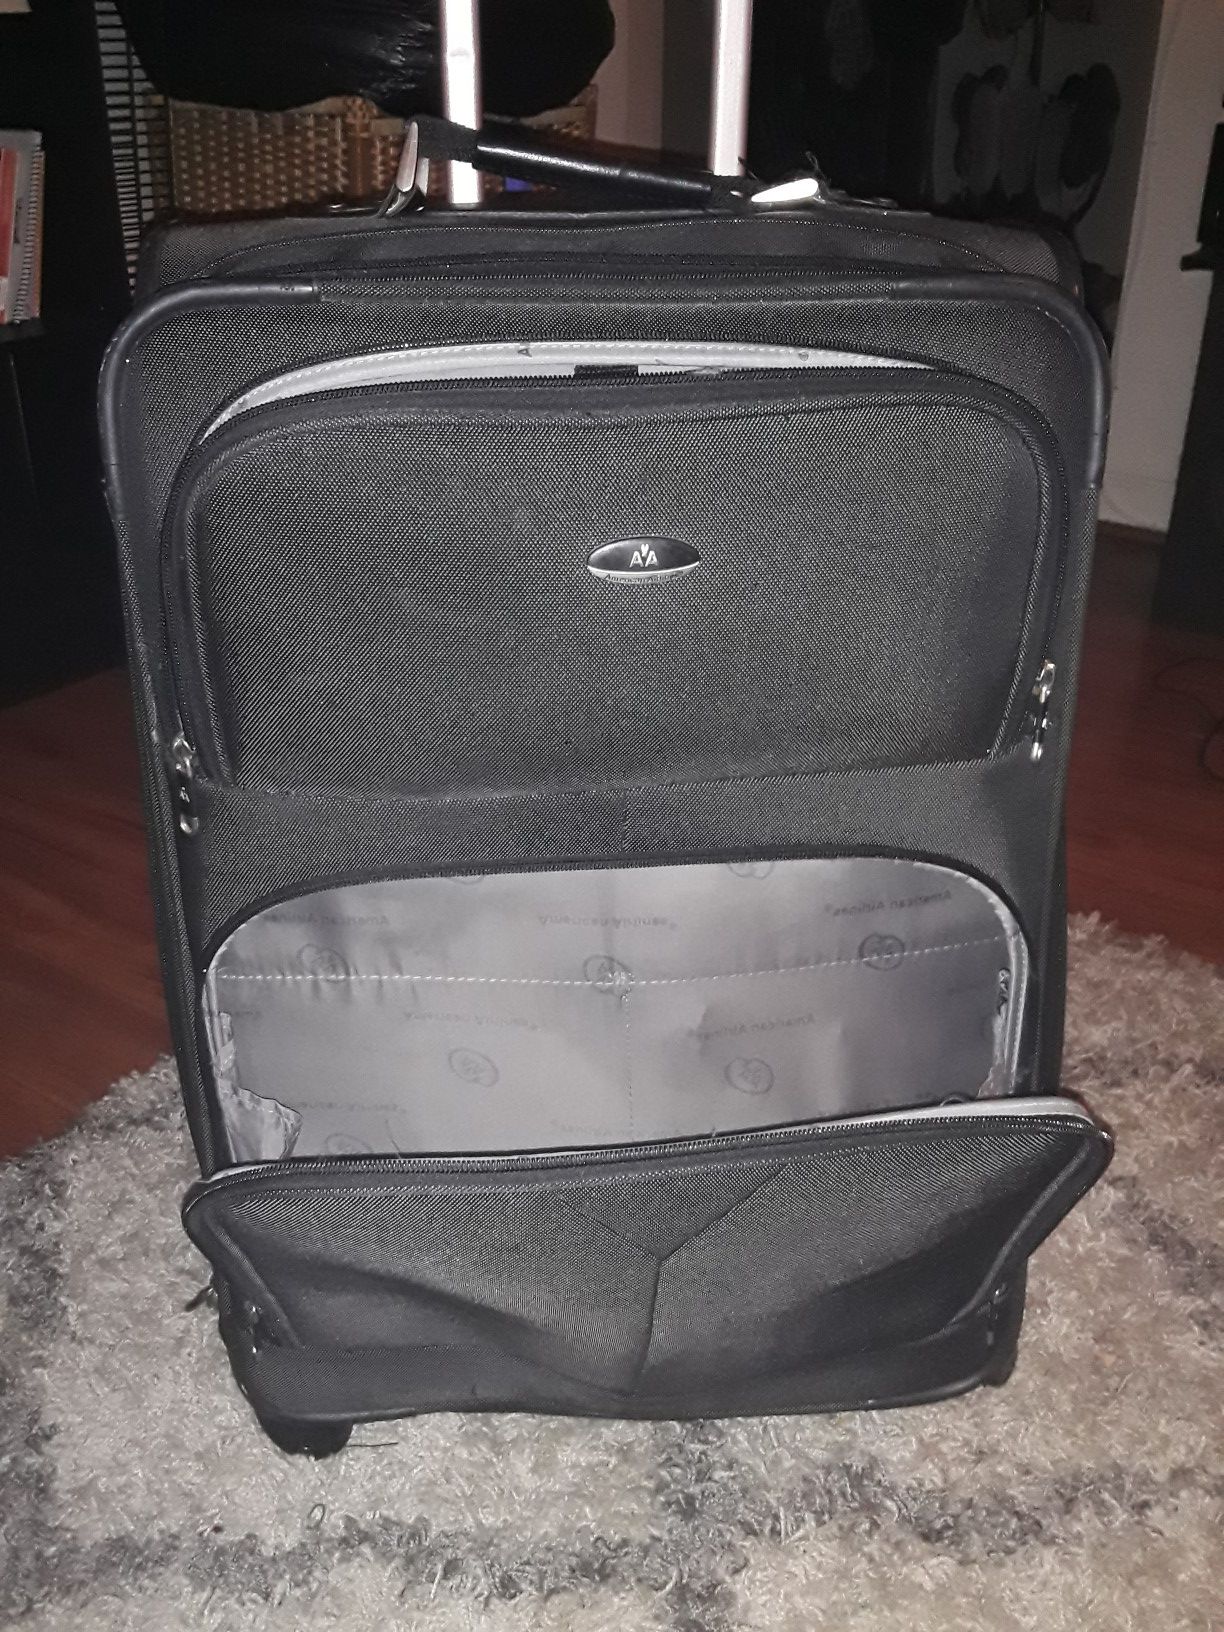 Black luggage rolling bag